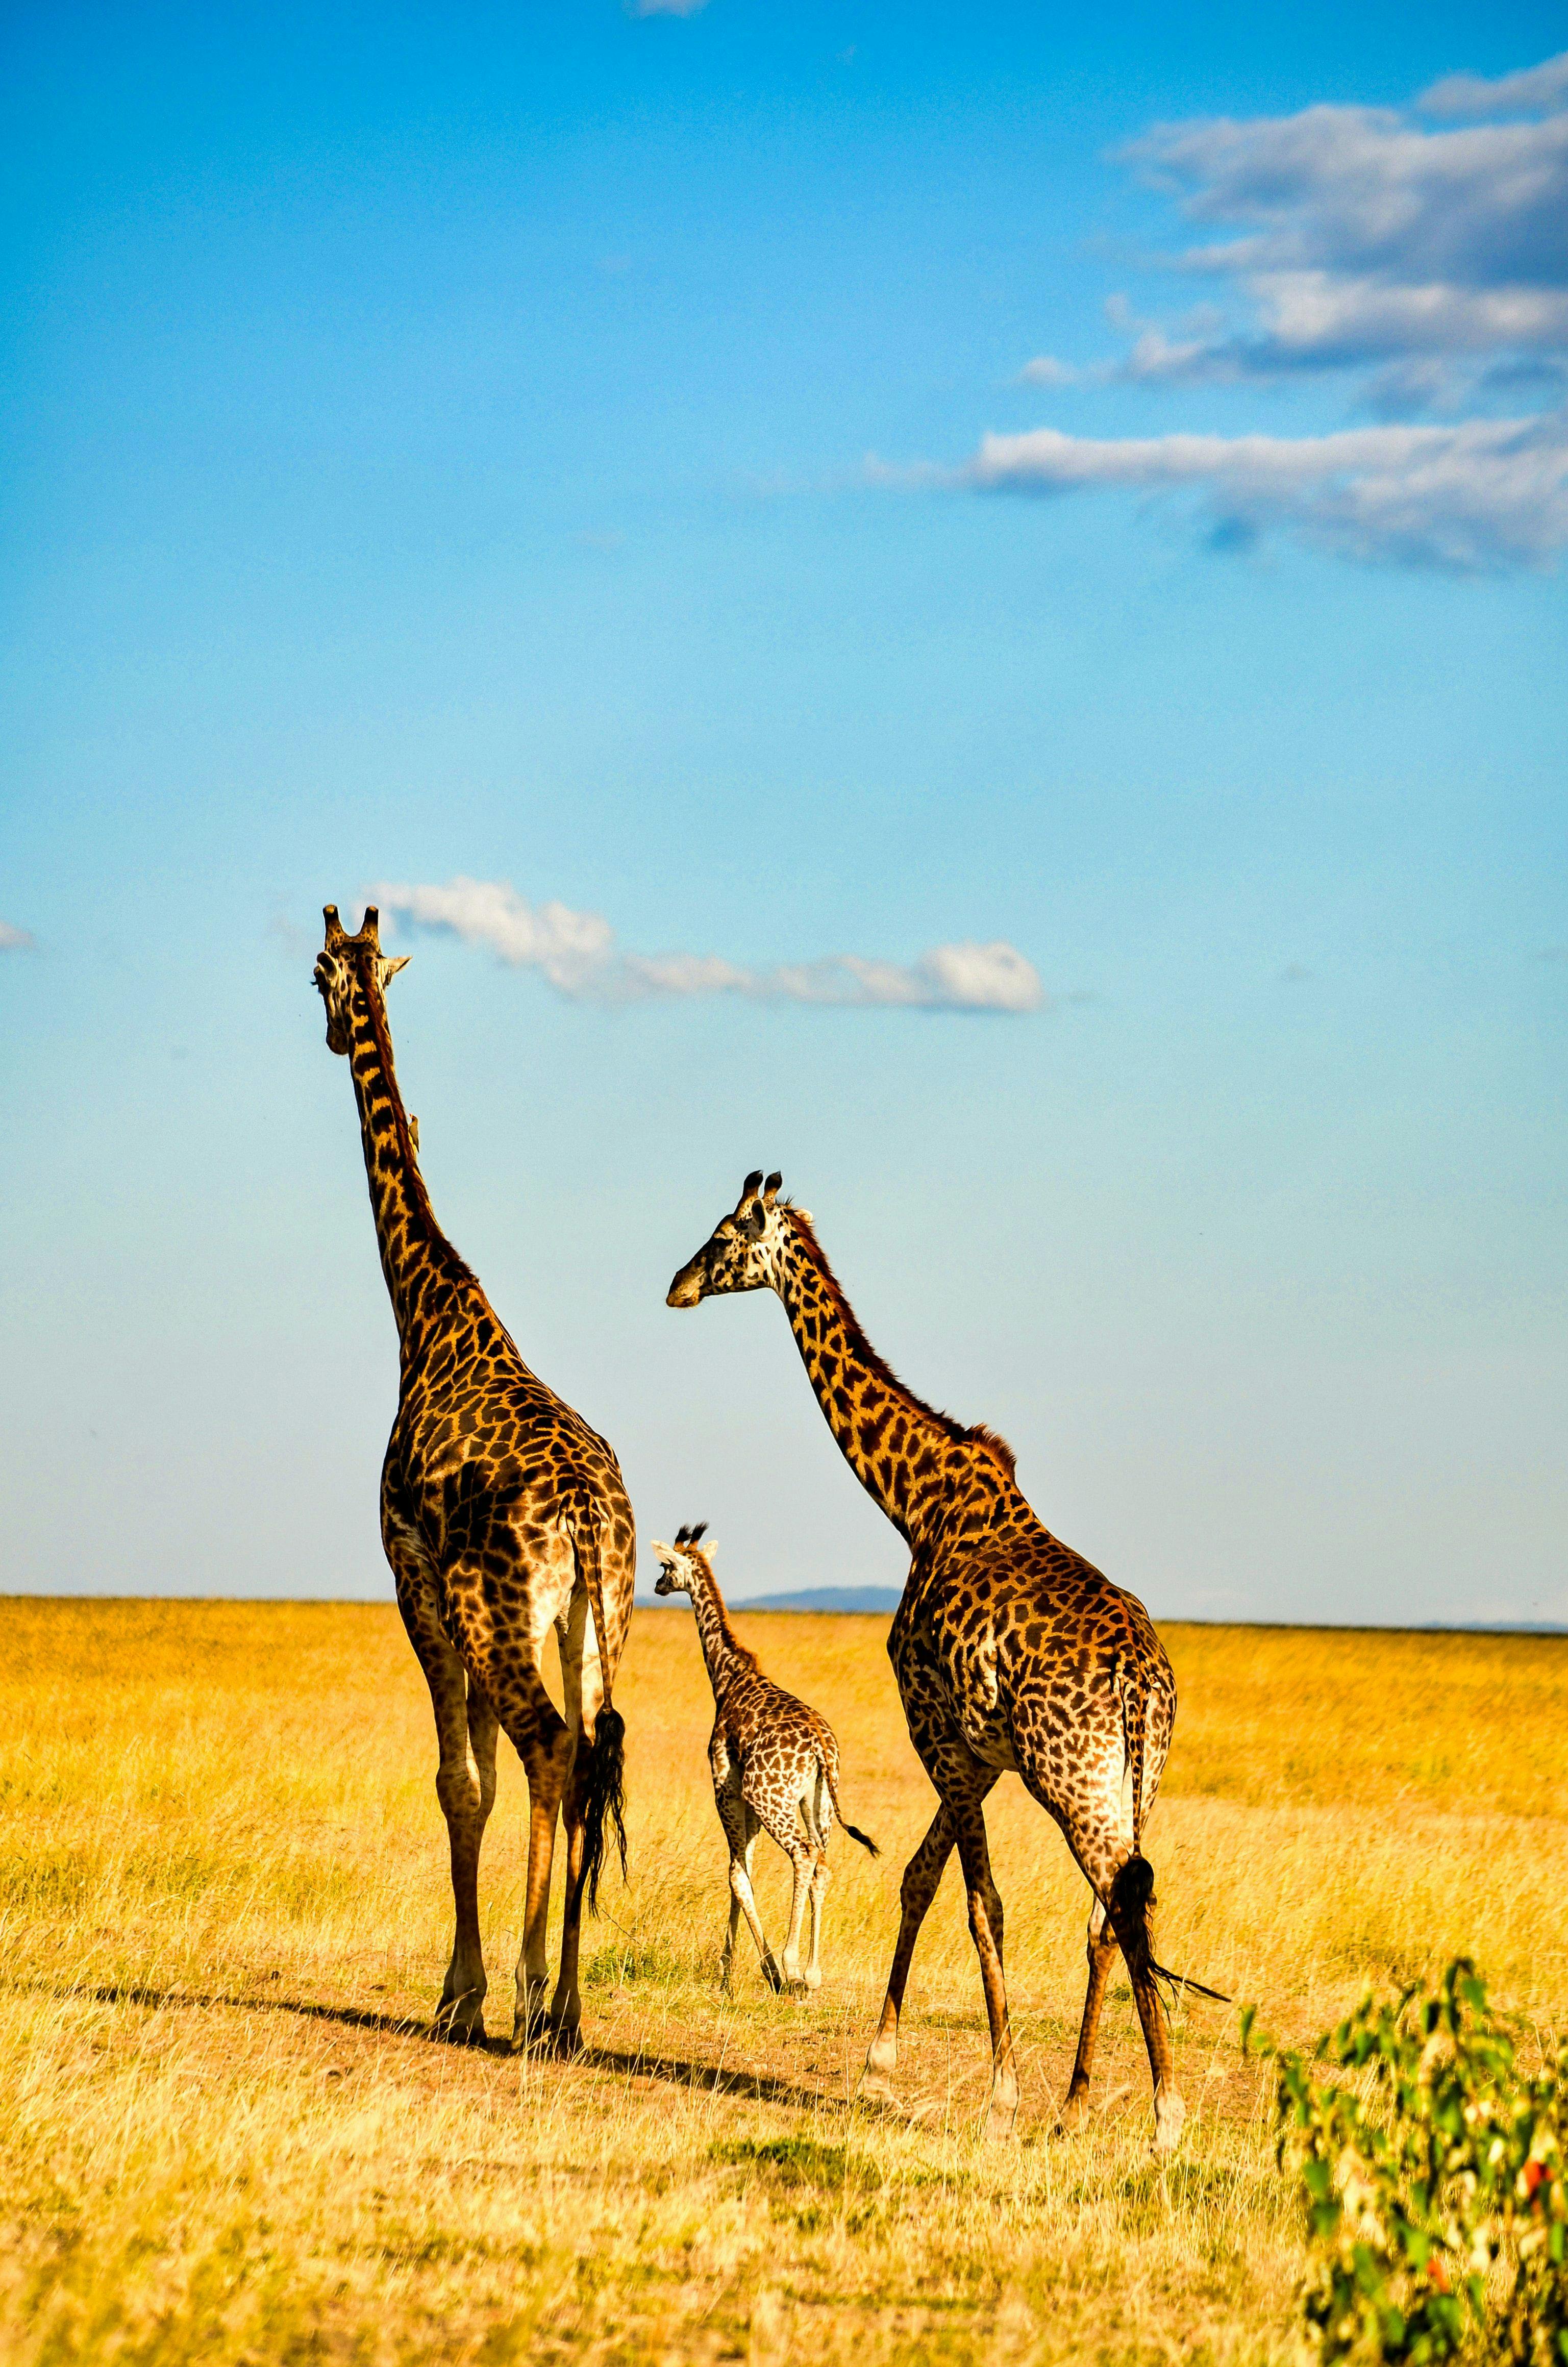 Giraffes in Maasai National Reserve in Kenya.